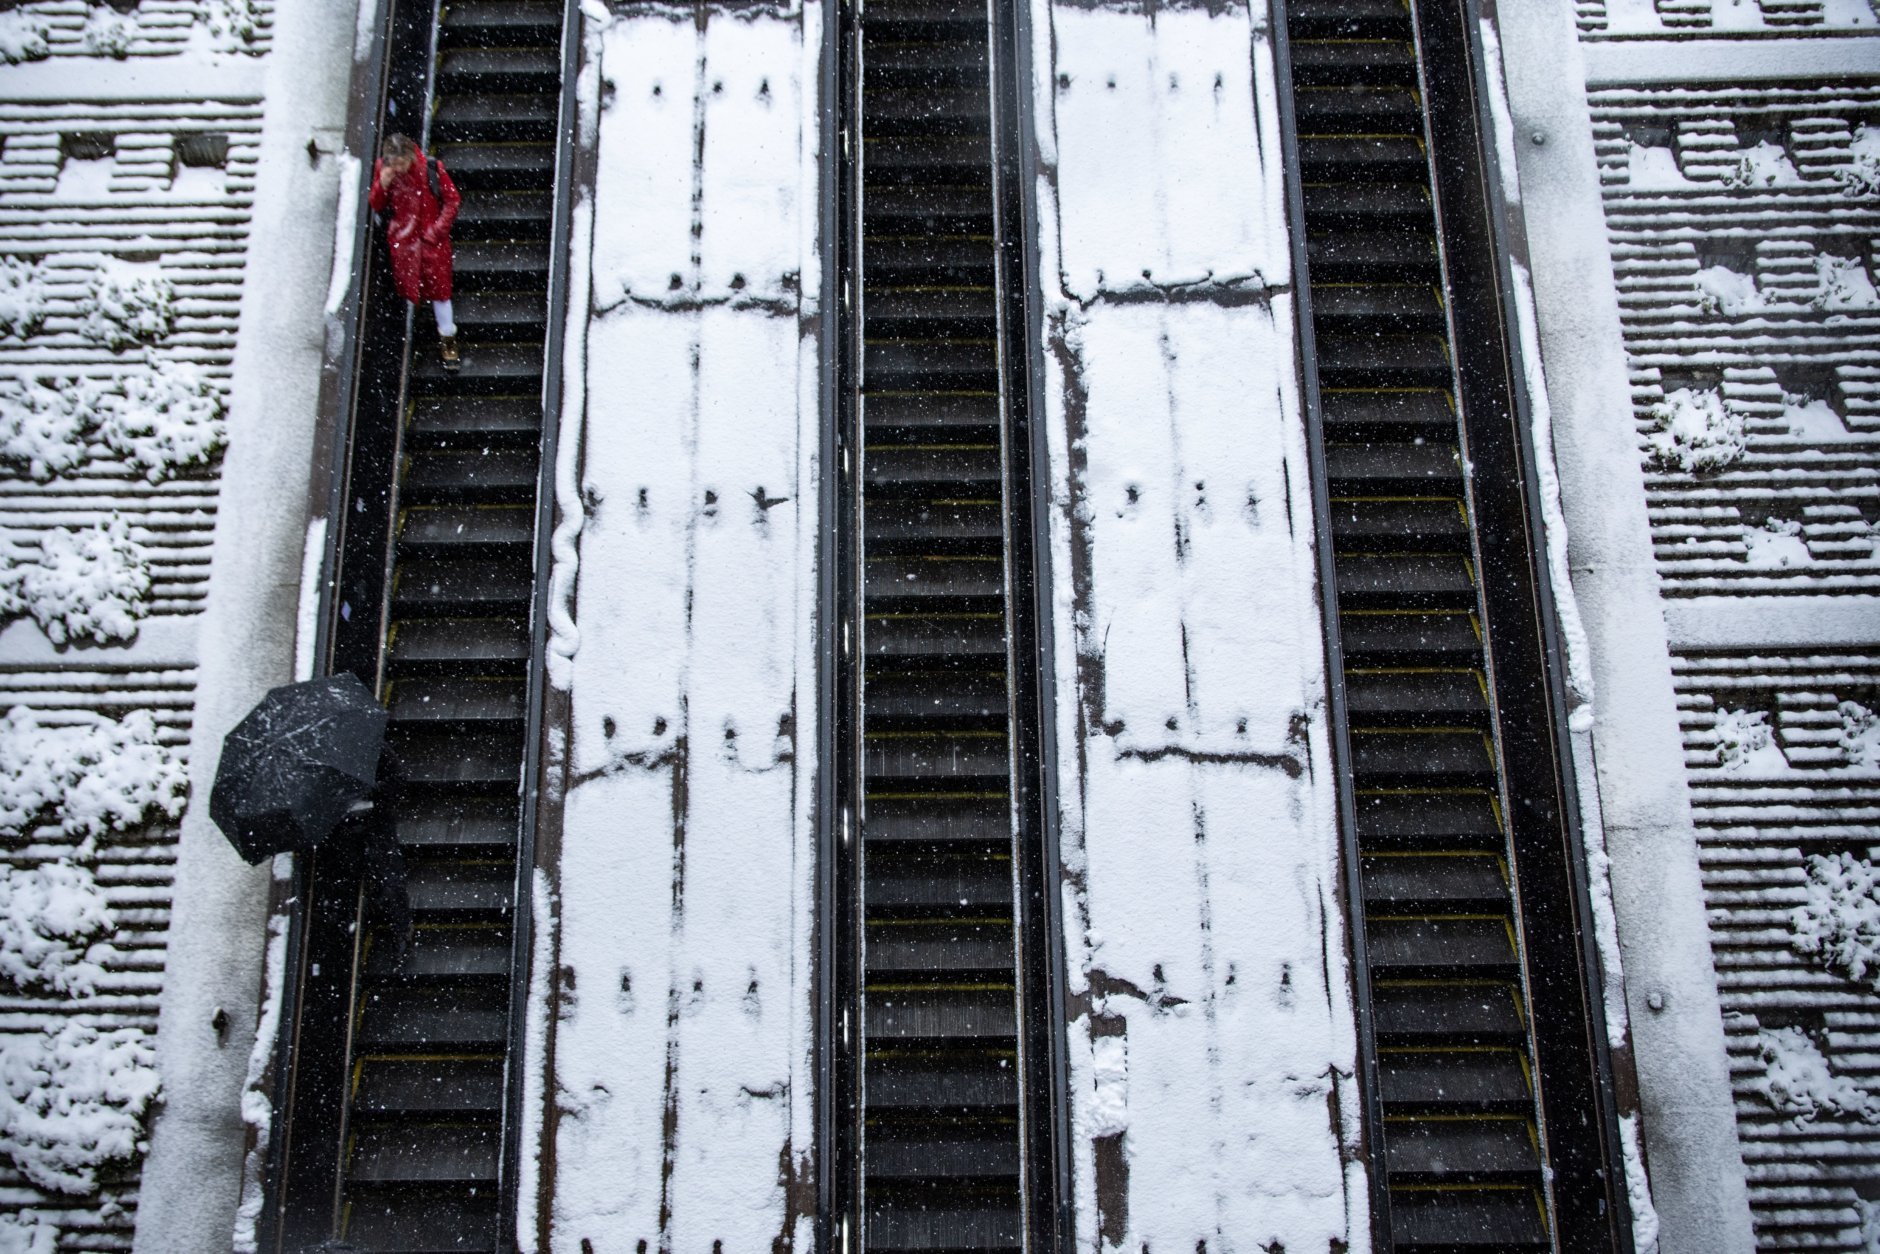 Escalators leading into the Dupont Circle Metro Station on Wednesday morning. (WTOP/Alejandro Alvarez)